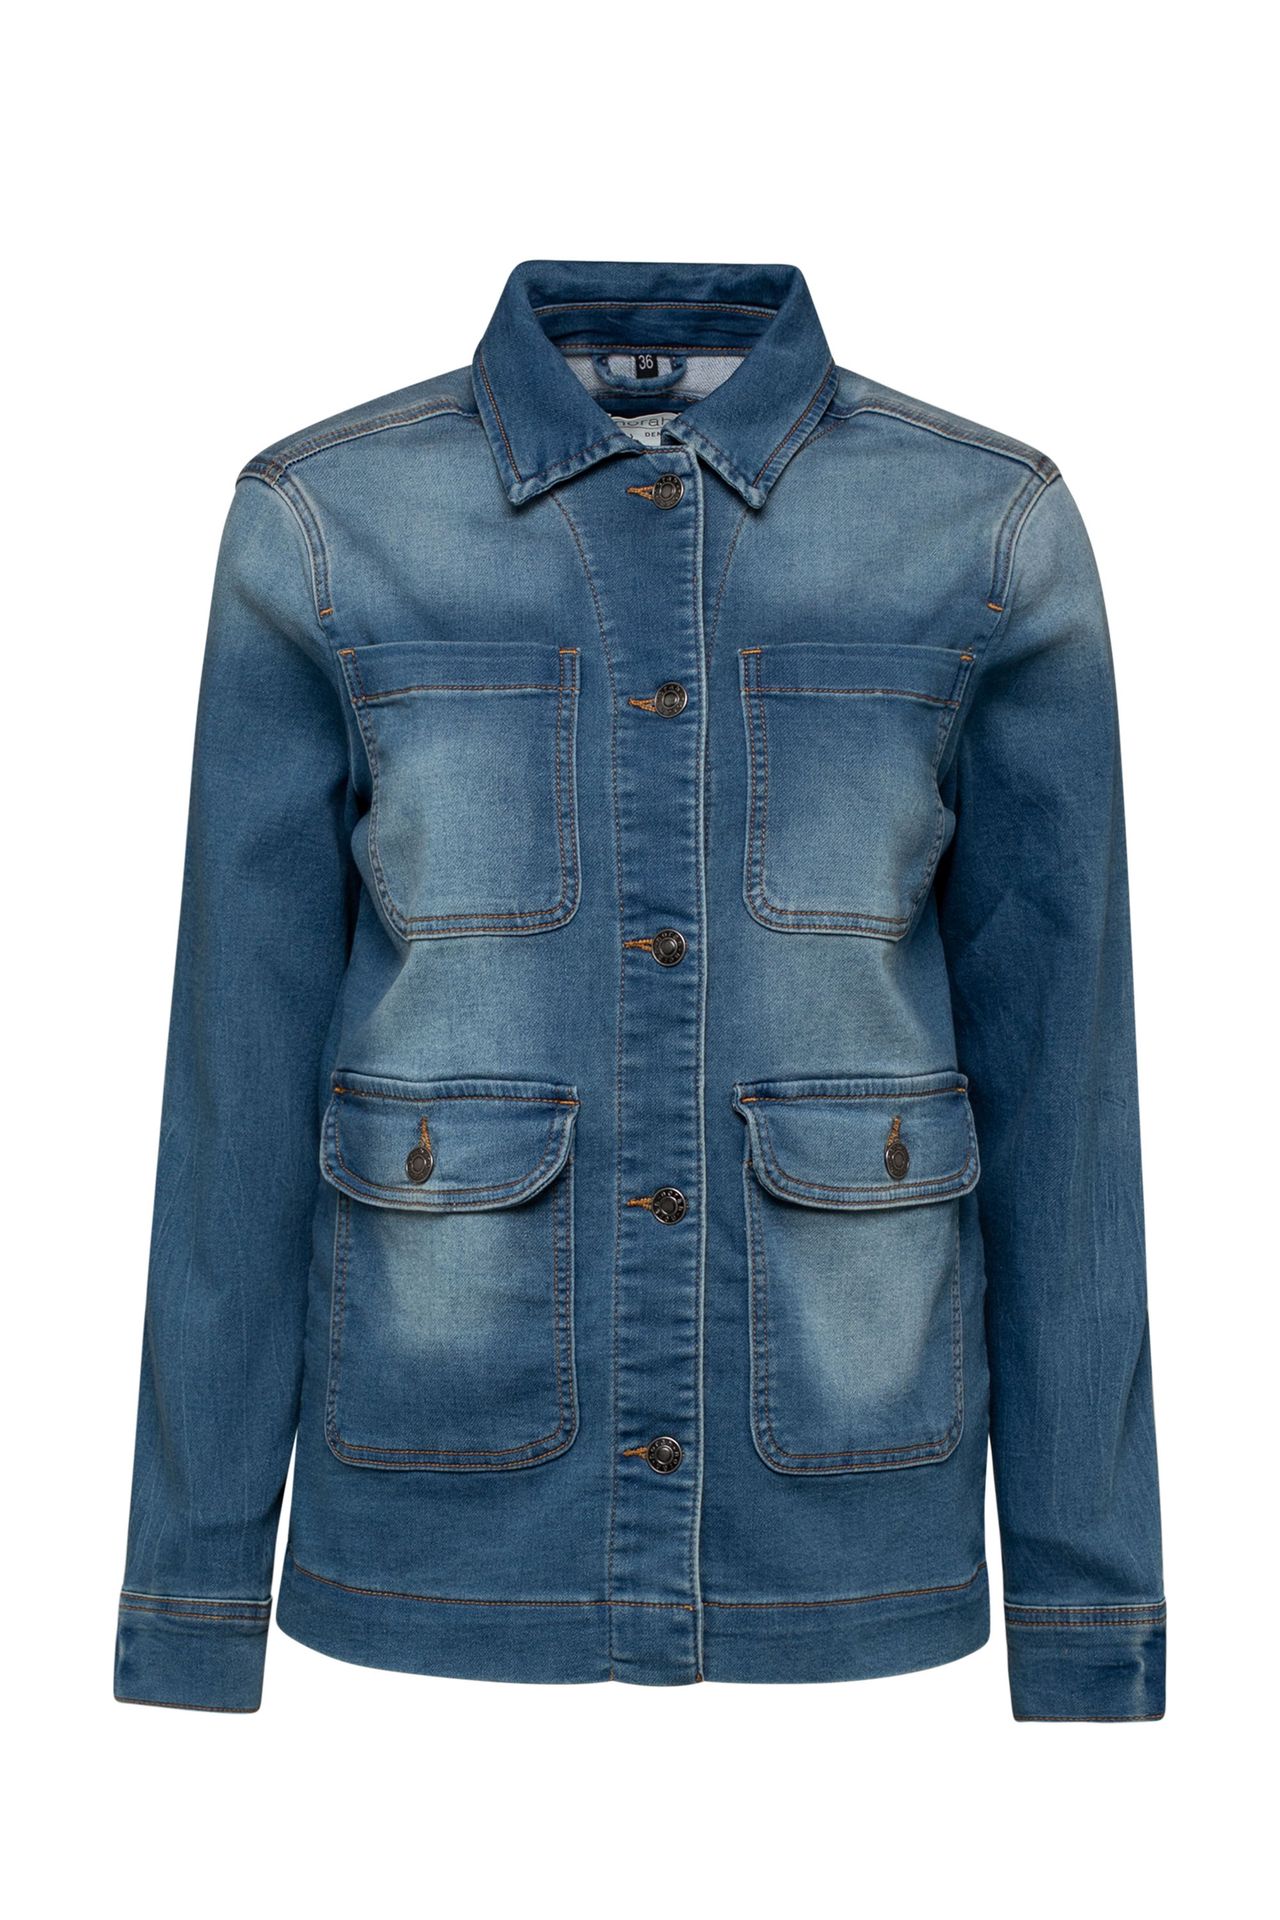  Denim jacket blue P-212348-400